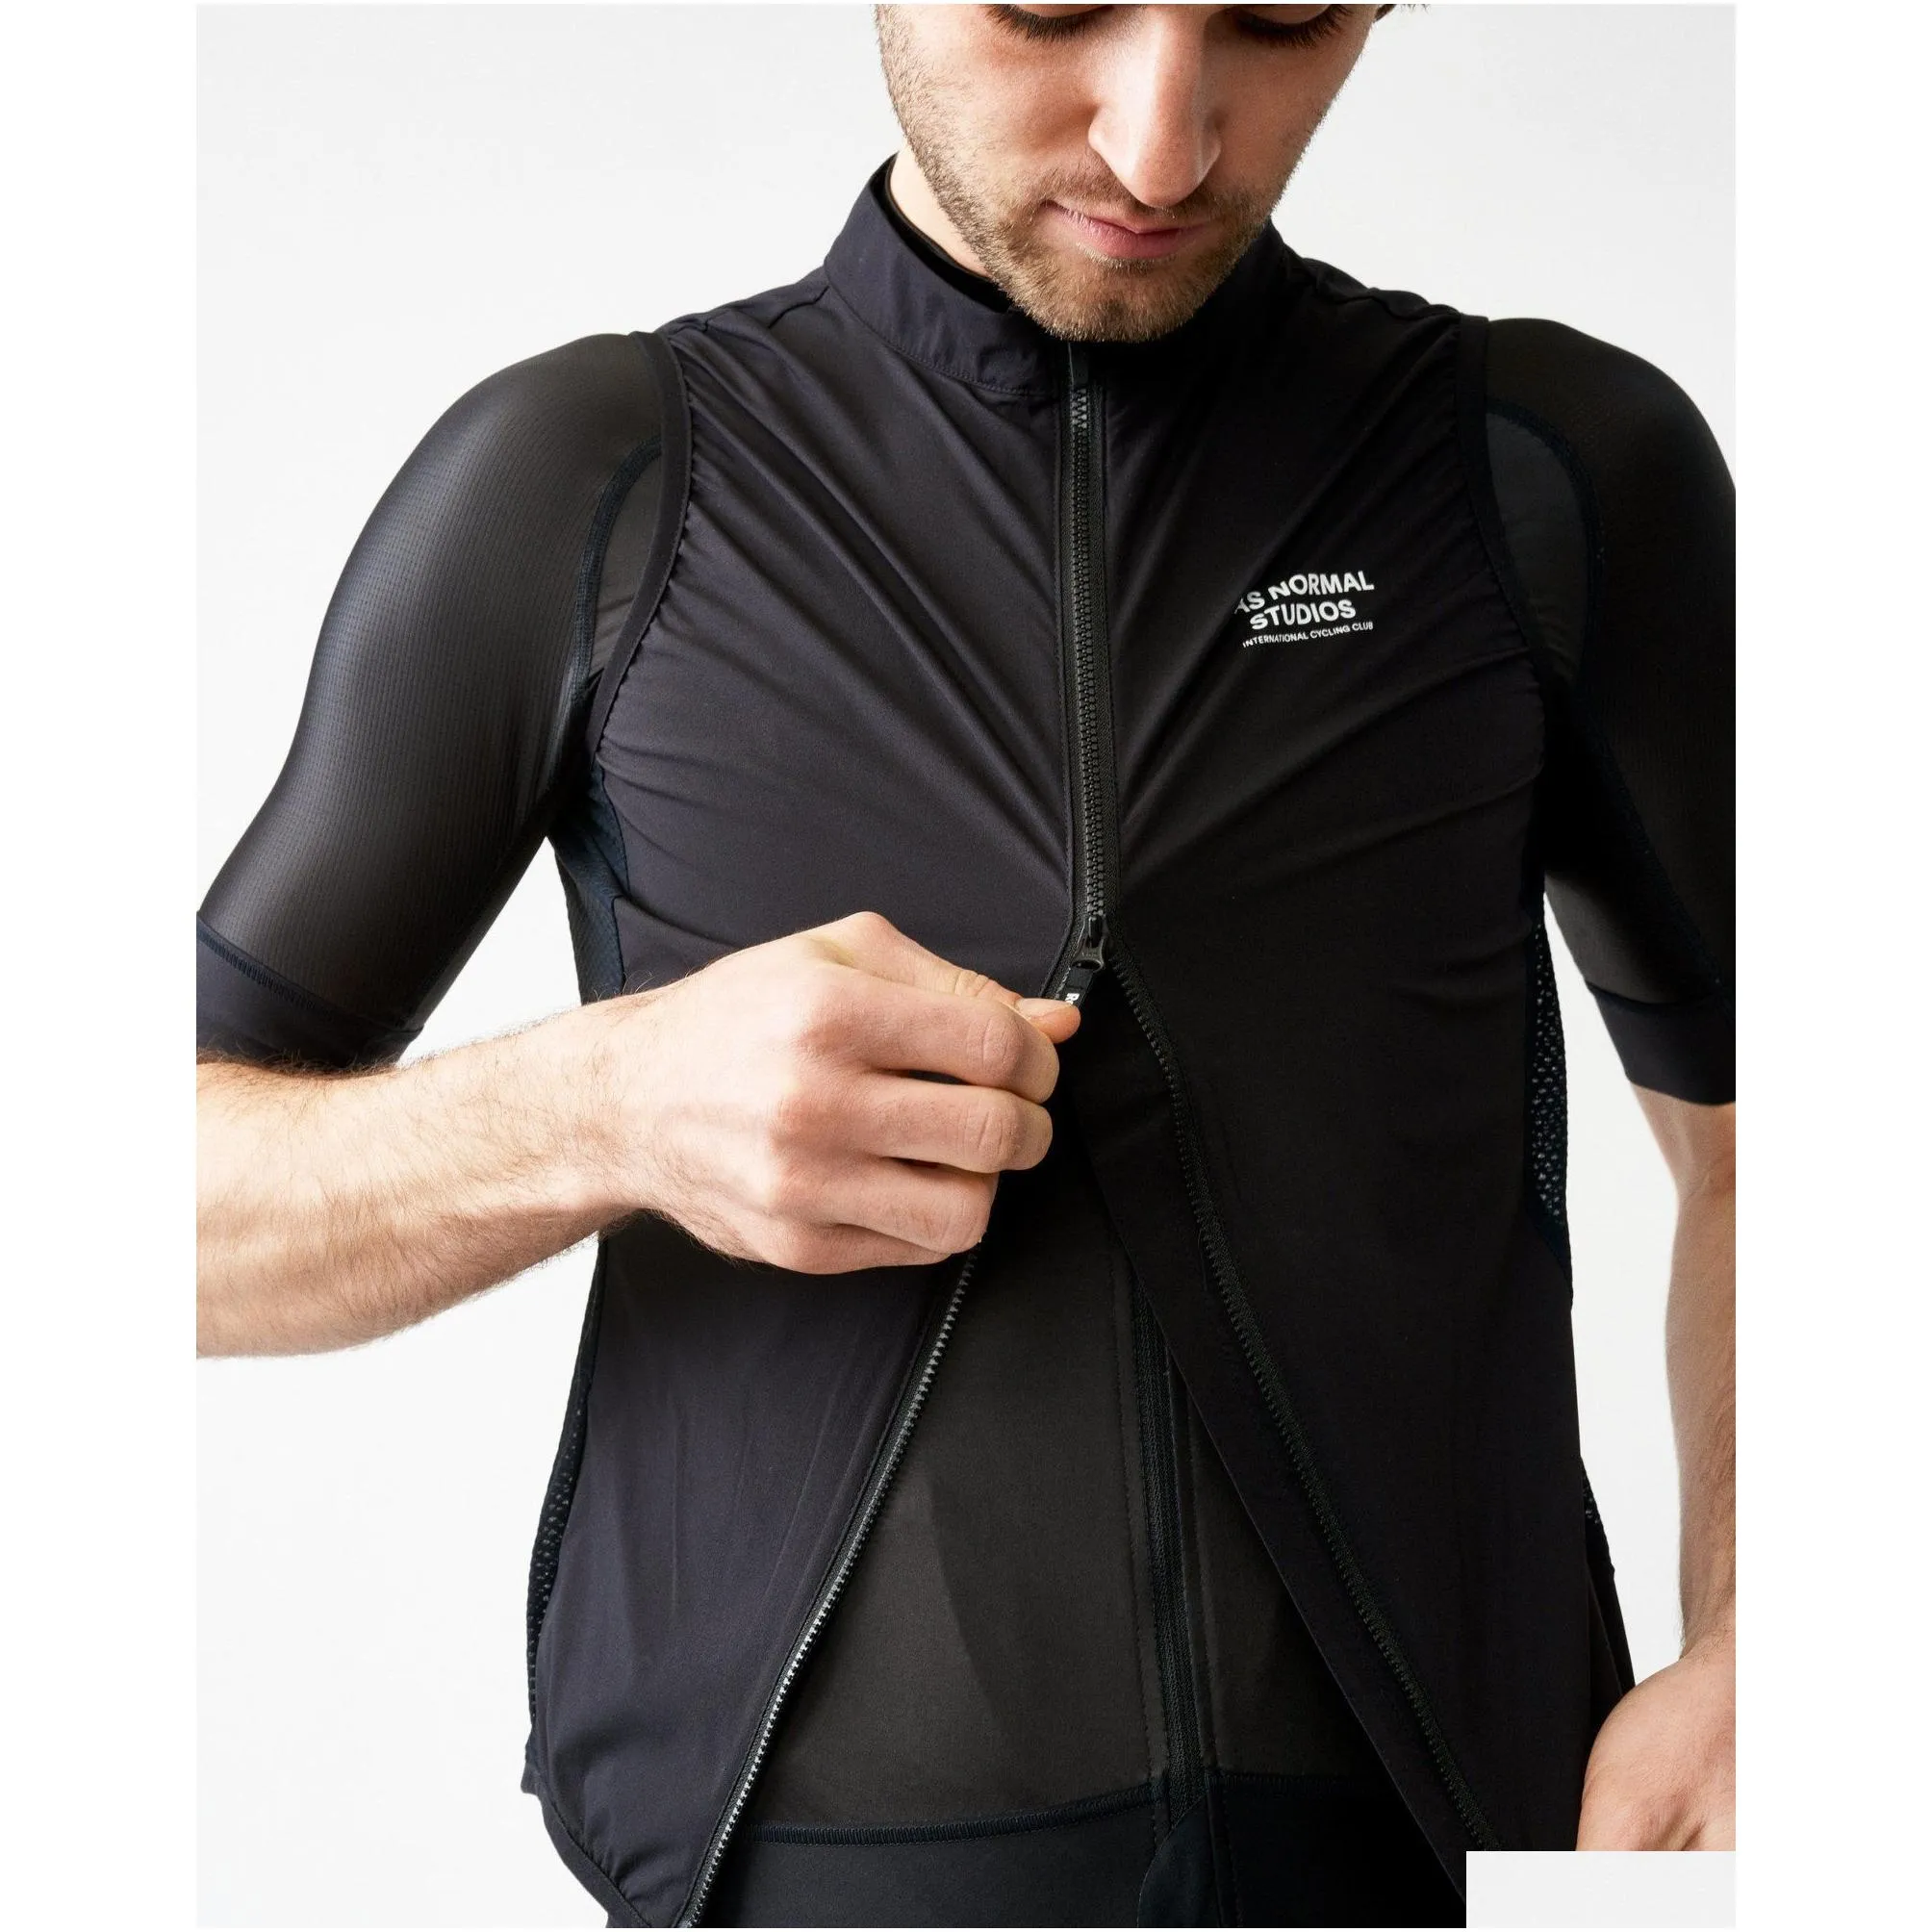 Cycling Jackets PNS PAS NORMAL STUDIOS Lighweight Cycling GILET Windproof Cycling Vest For Men And Women 2 way zipper 230209